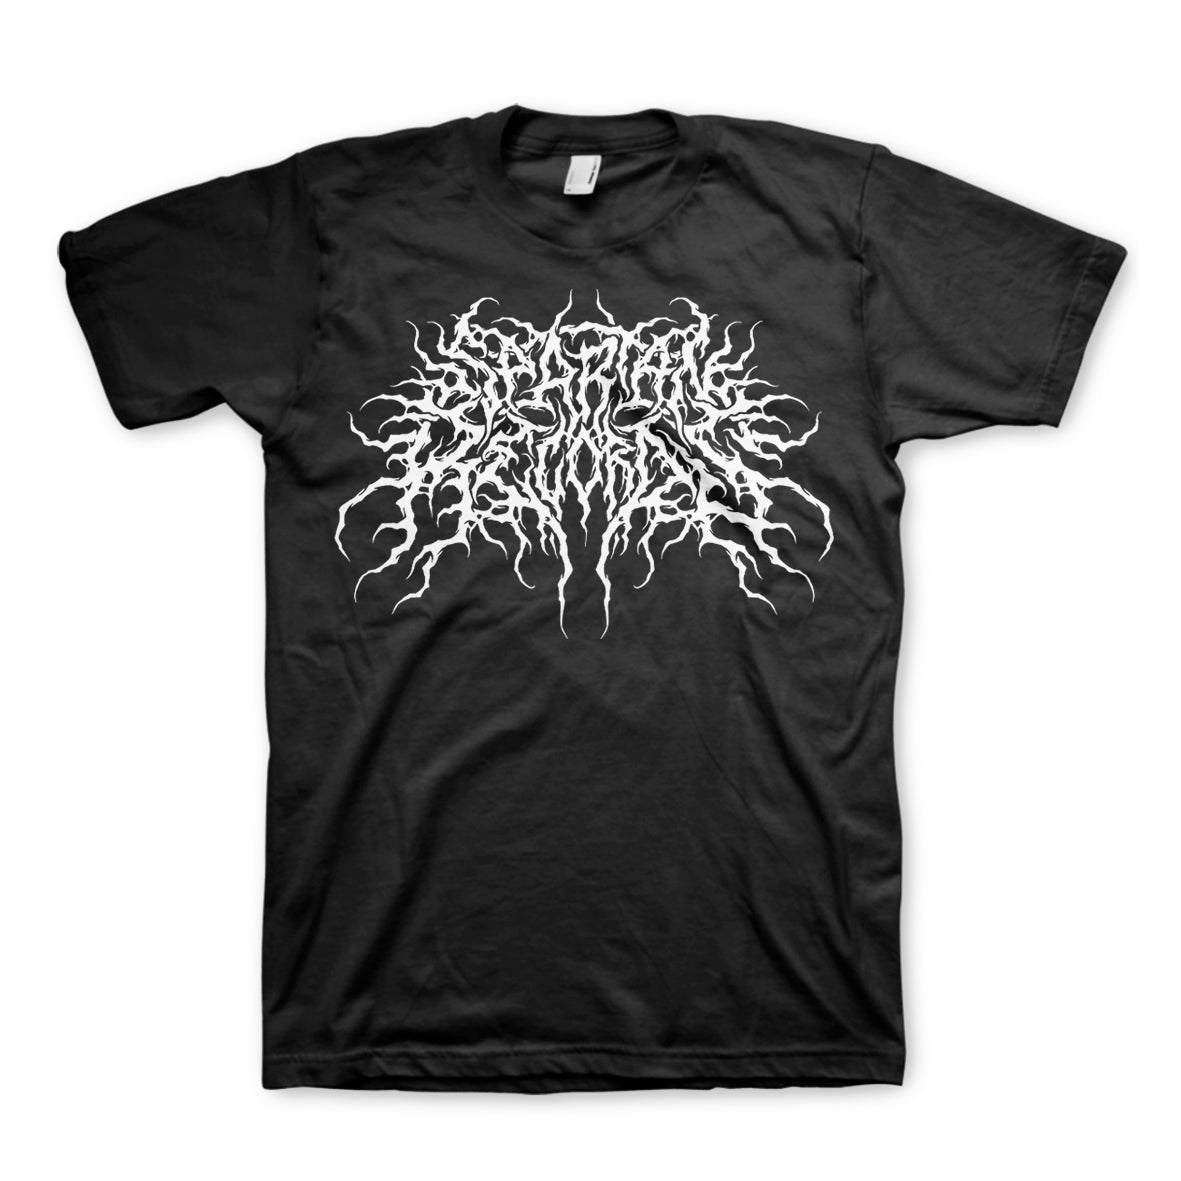 Spartan Black Metal T-Shirt